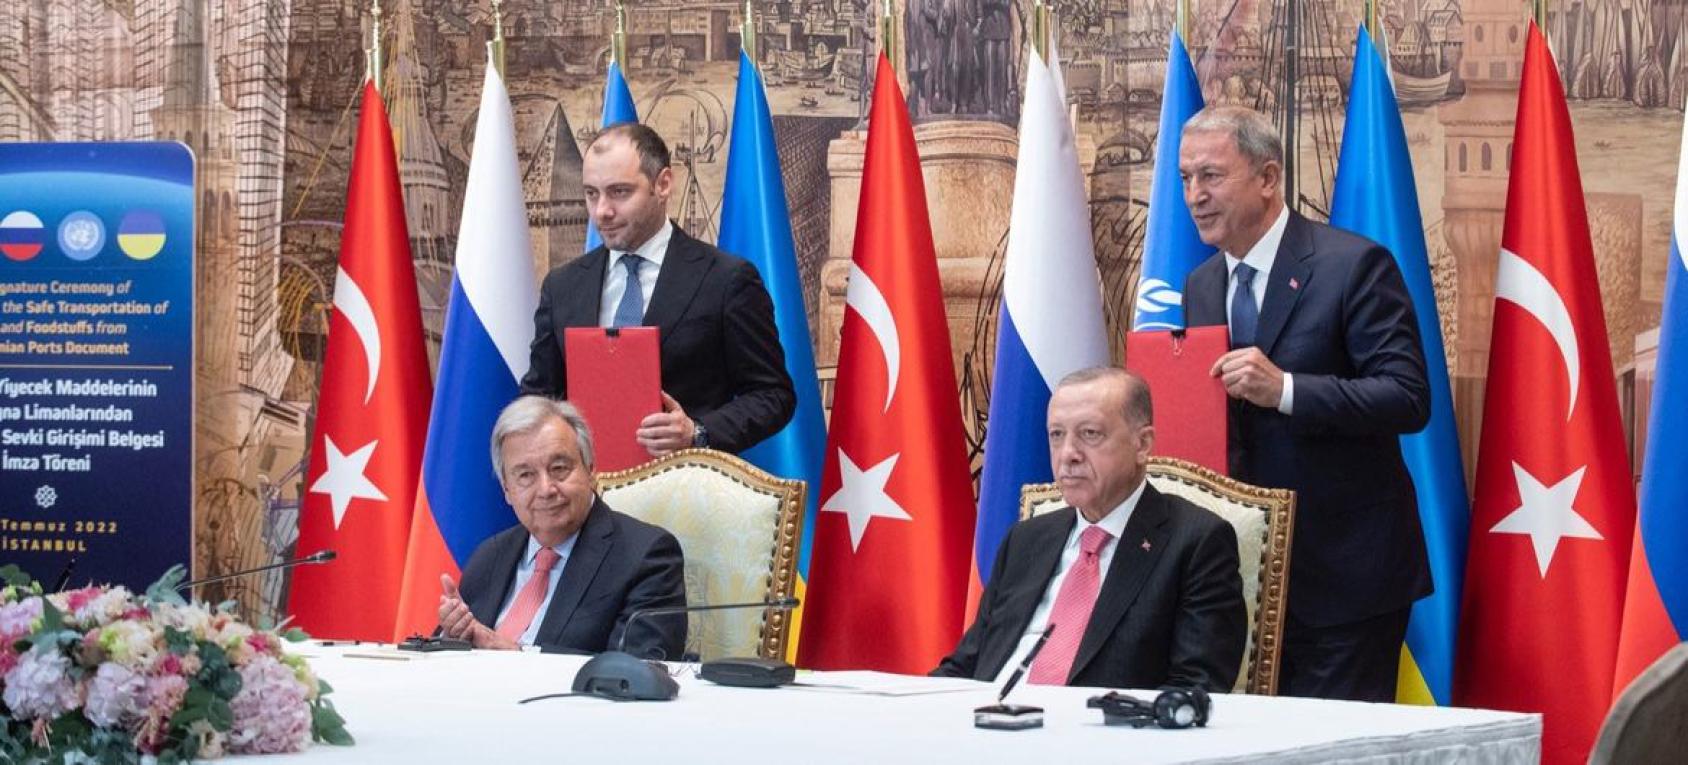 UN SG António Guterres and Turkish President Recep Erdoğan during the Black Sea signing ceremony. 